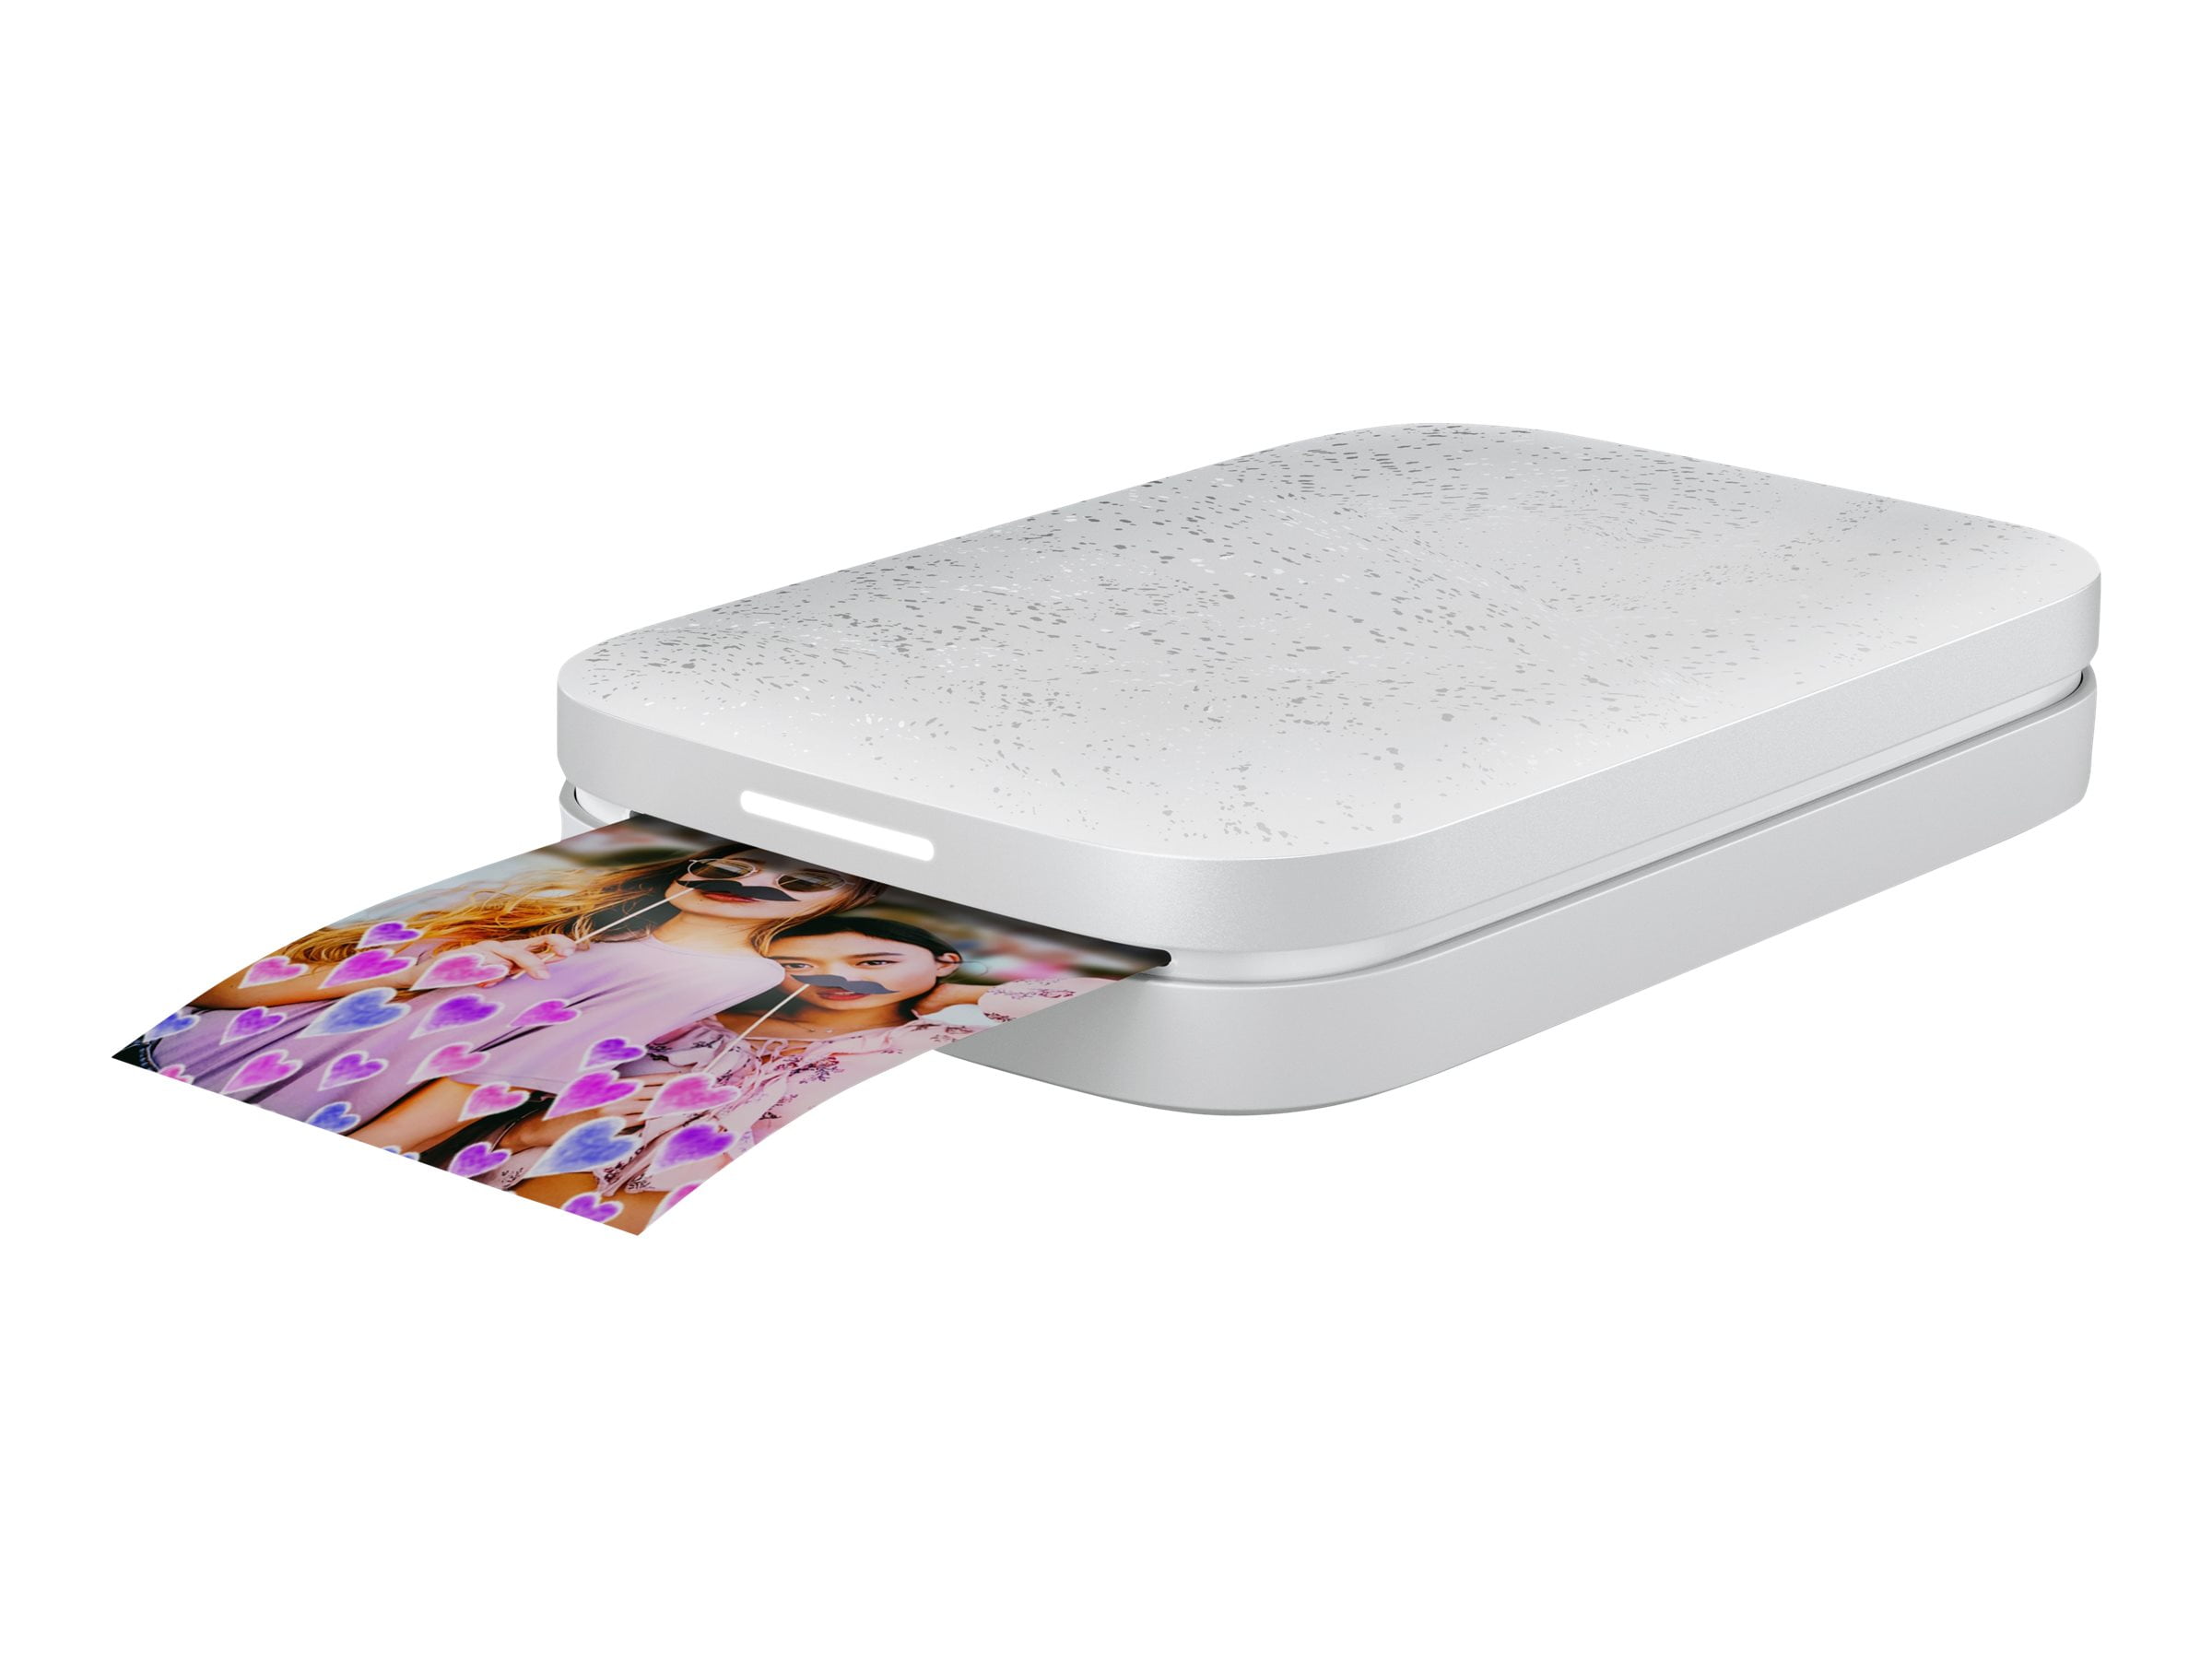  HP Sprocket Portable Photo Printer, X7N07A, Print Social Media  Photos on 2x3 Sticky-Backed Paper - White : Electronics